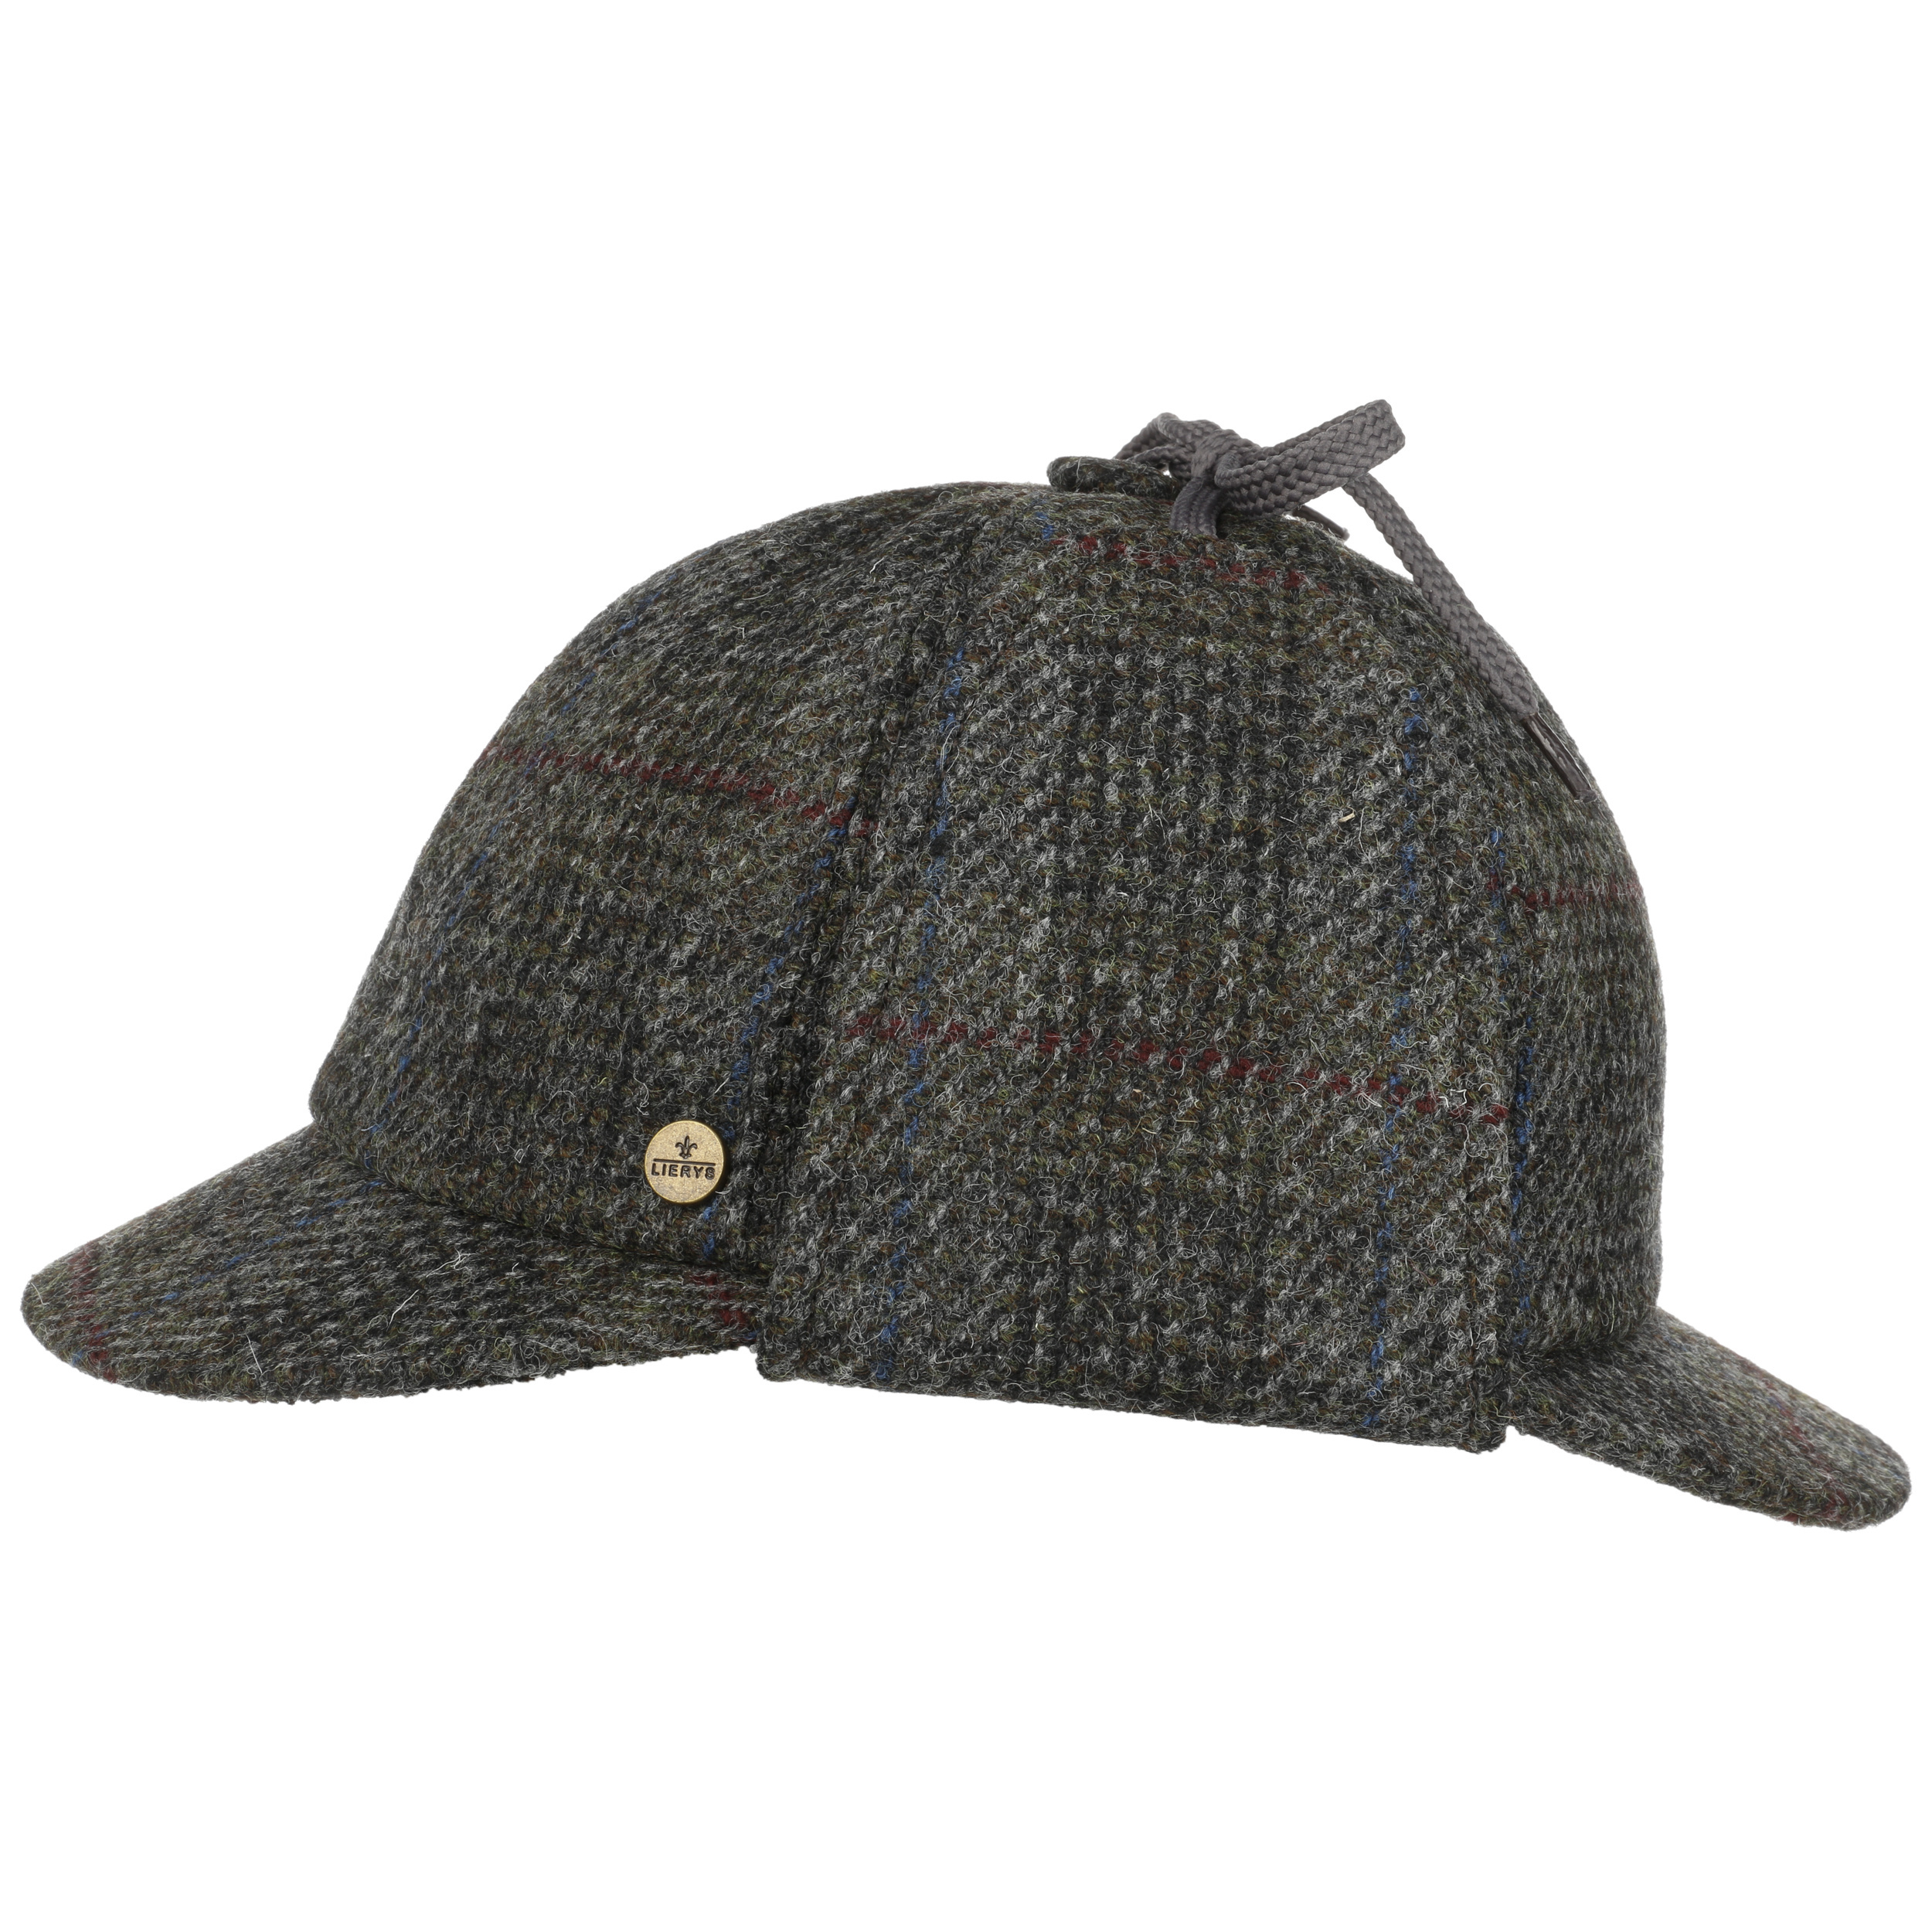 Deerstalker Cap by Lierys, EUR 69,95 --> Hats, caps & beanies shop ...